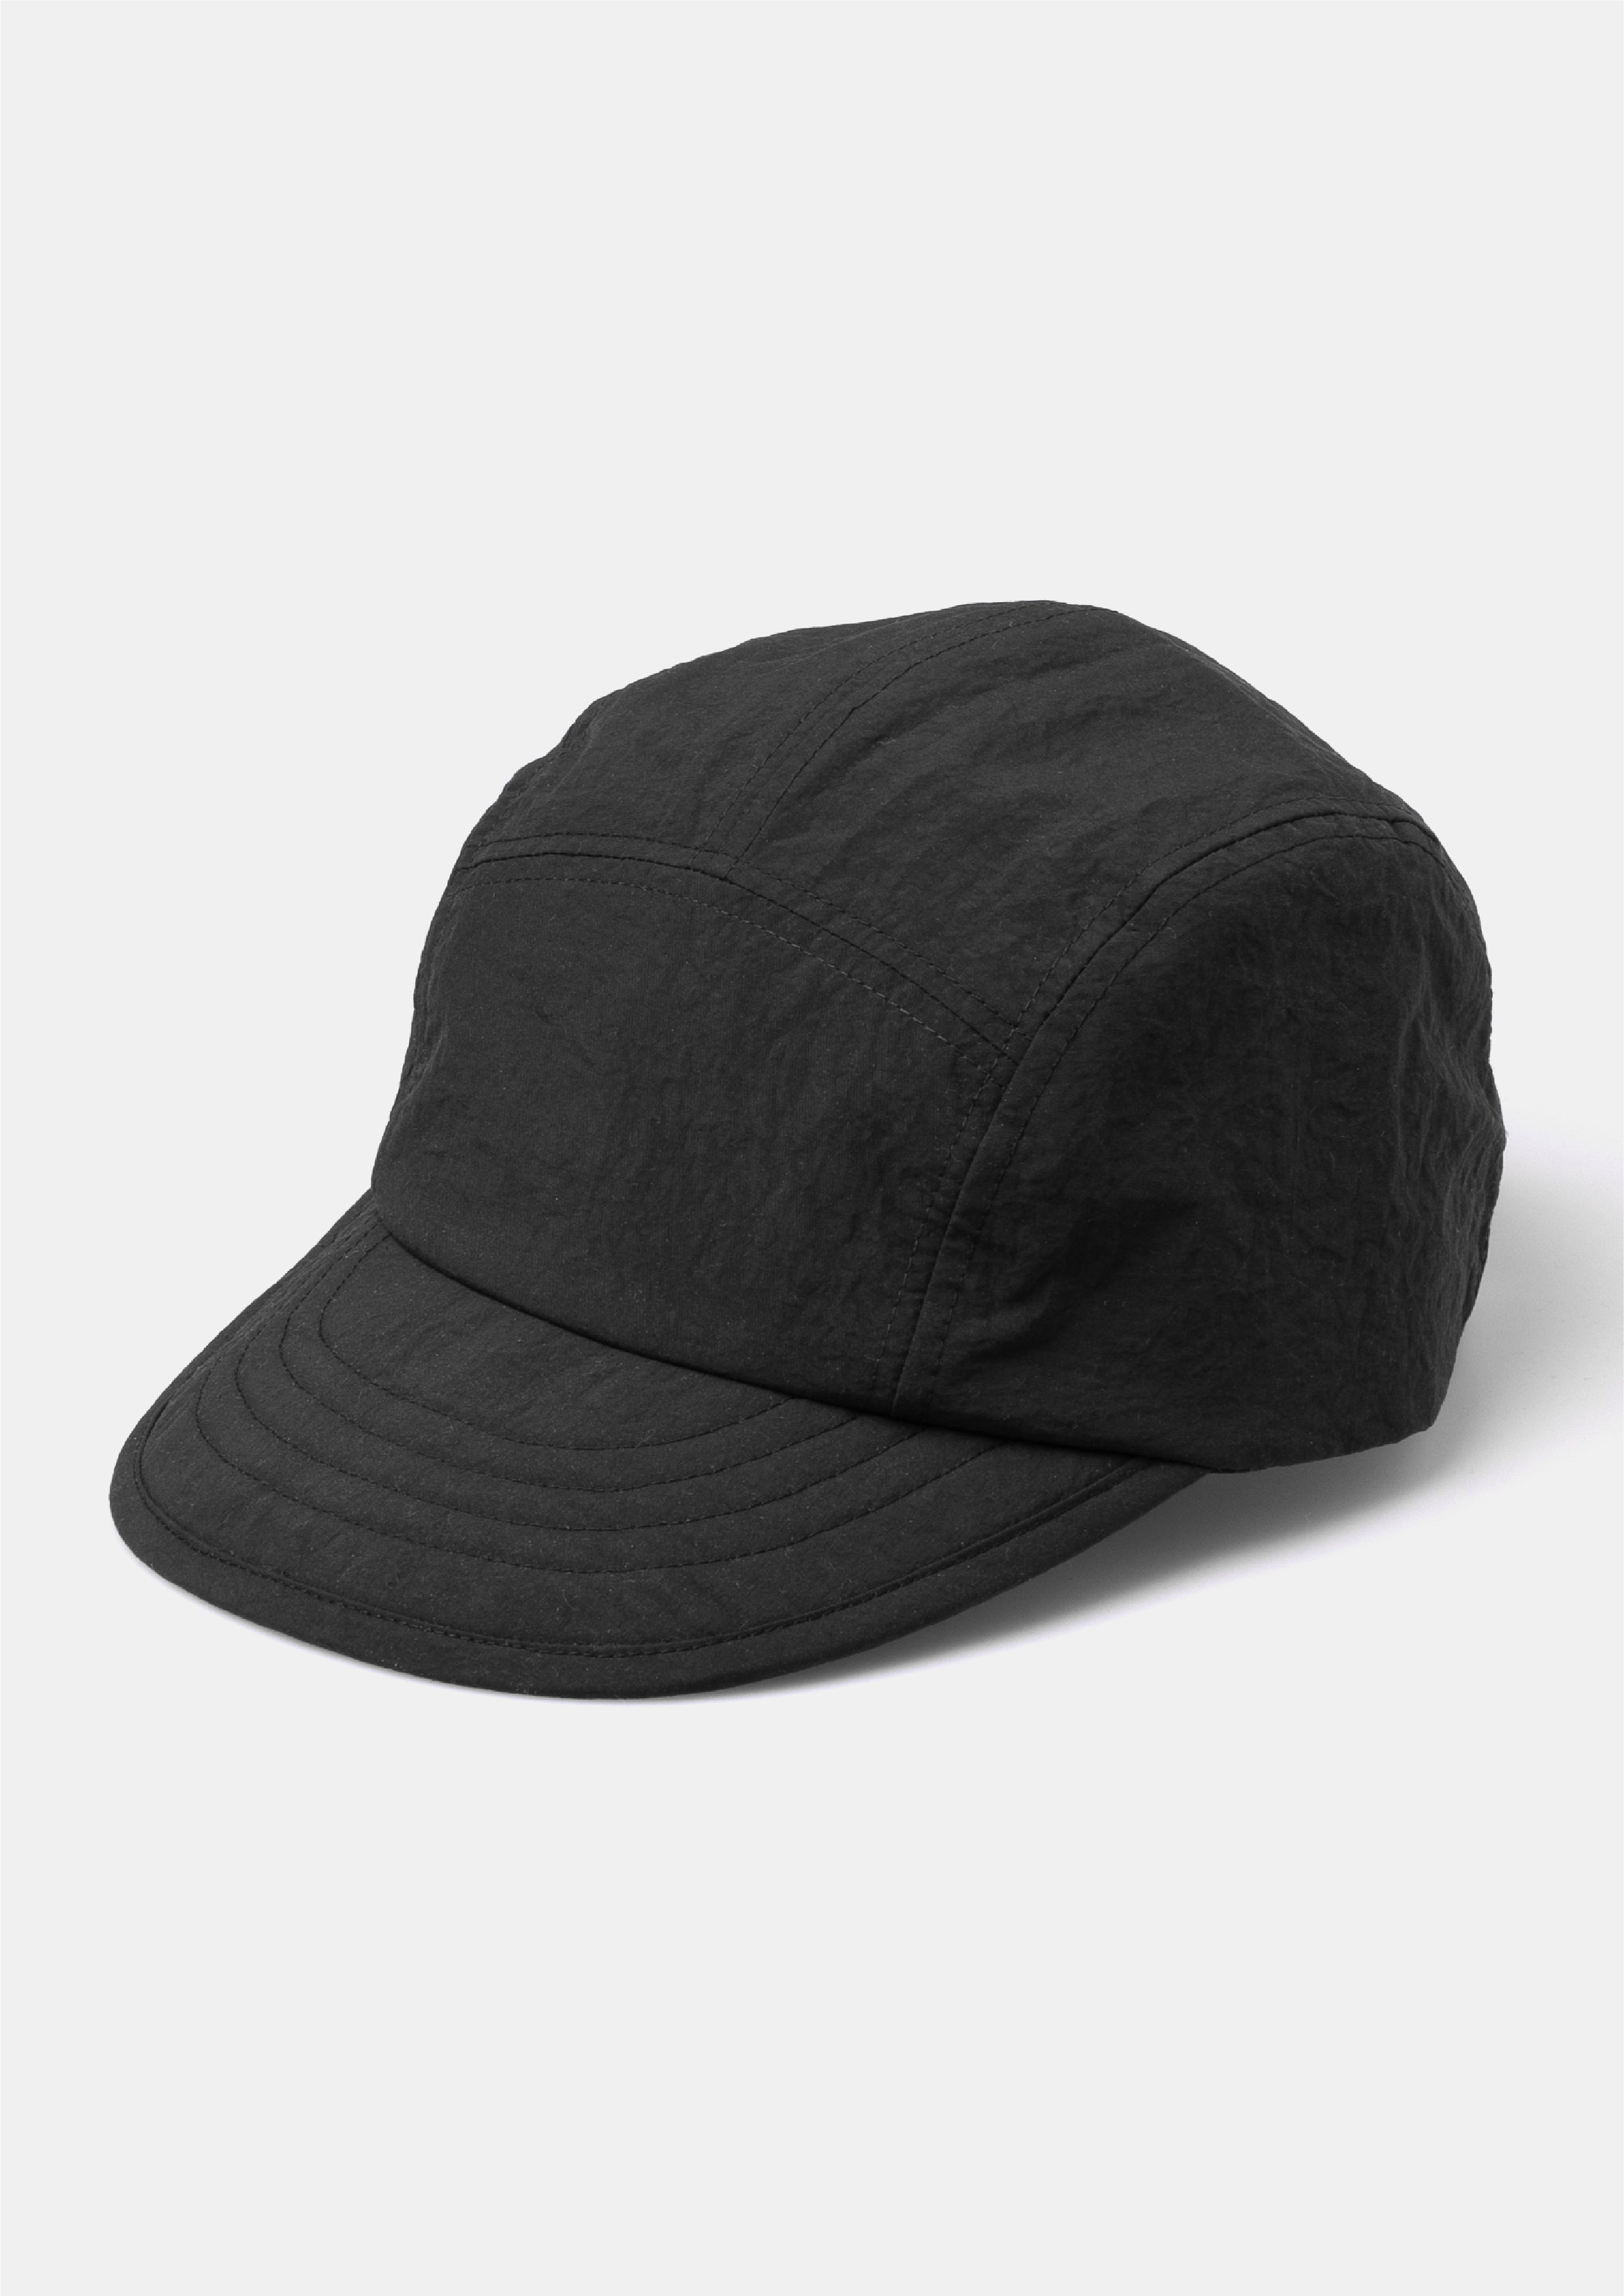 UNNAMED HEADWEAR BASQUE BERET ベレー帽 - ハンチング/ベレー帽